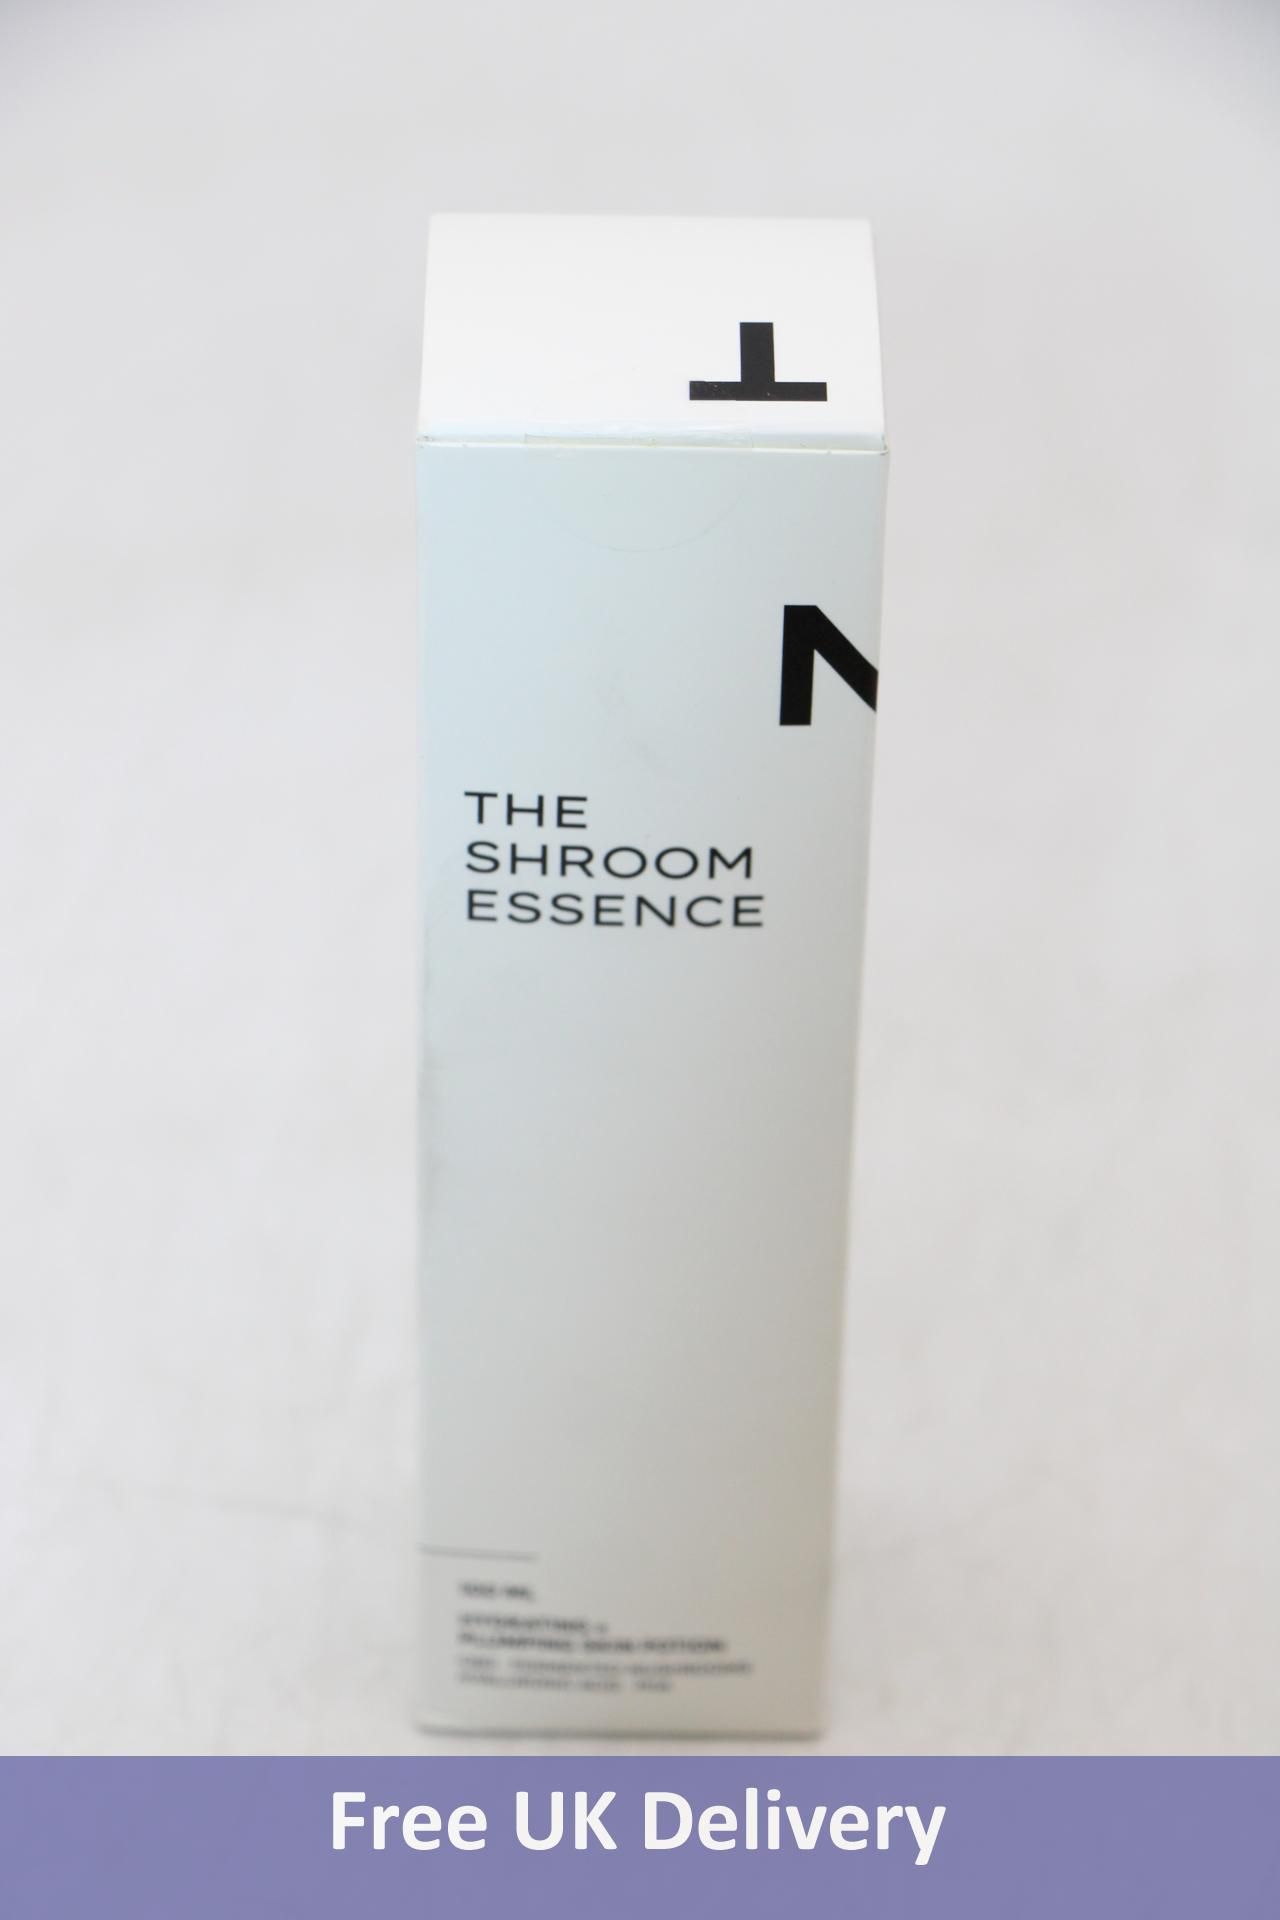 Ten Mantle The Shroom Essence Bottle Hydrating x Plumping Skin Potion Cbd, Size 100ml - Image 9 of 10